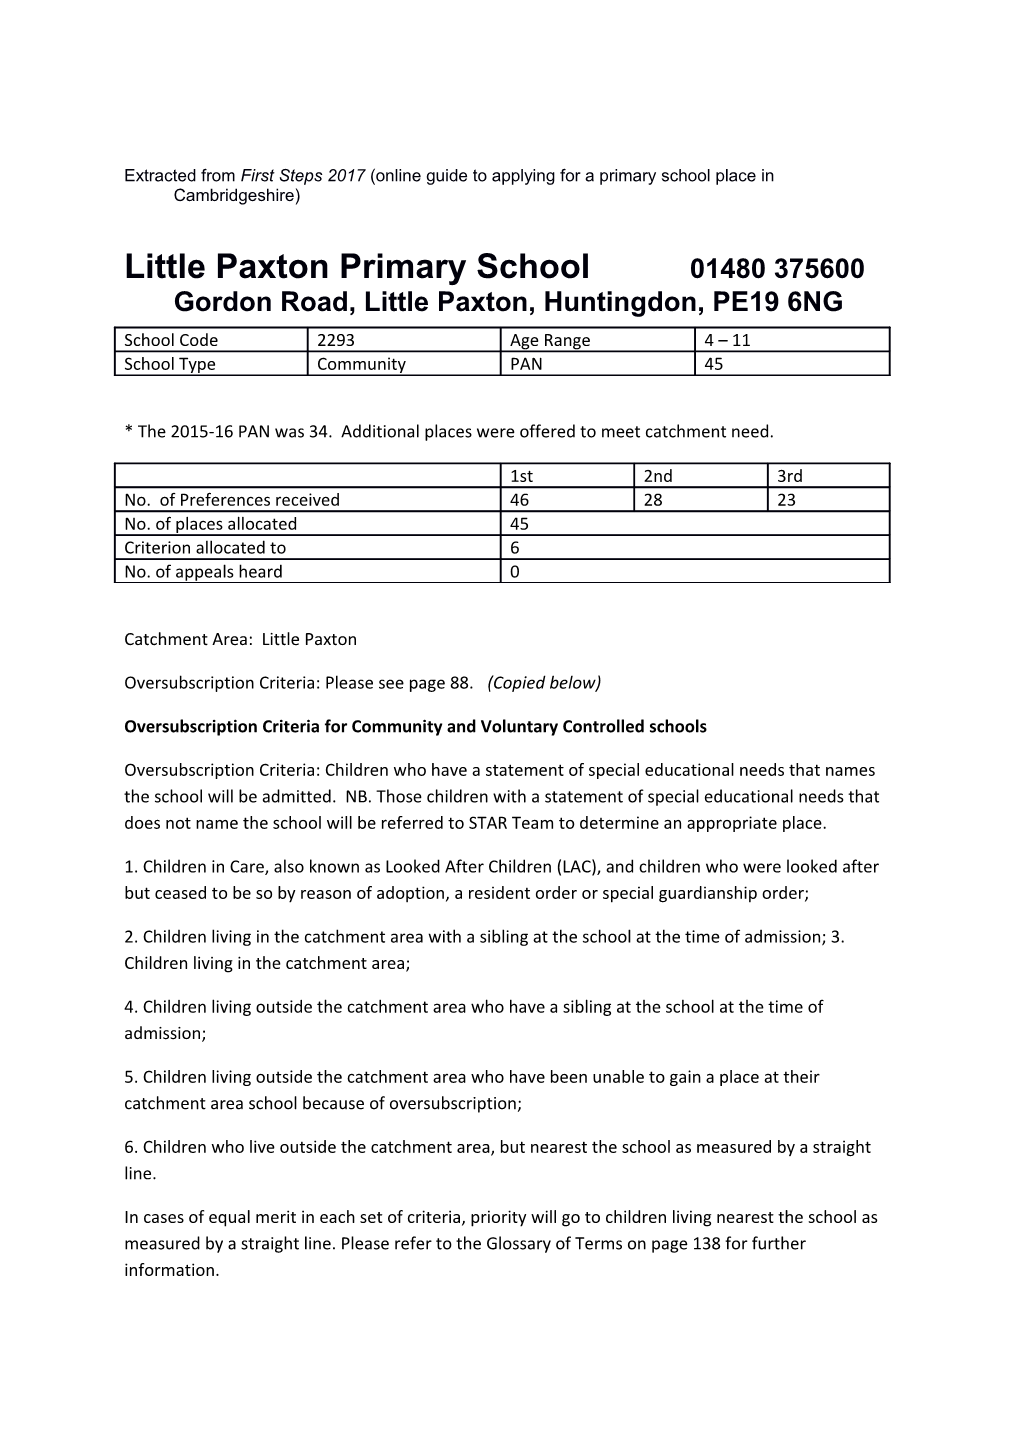 Little Paxton Primary School 01480 375600 Gordon Road, Little Paxton, Huntingdon, PE19 6NG